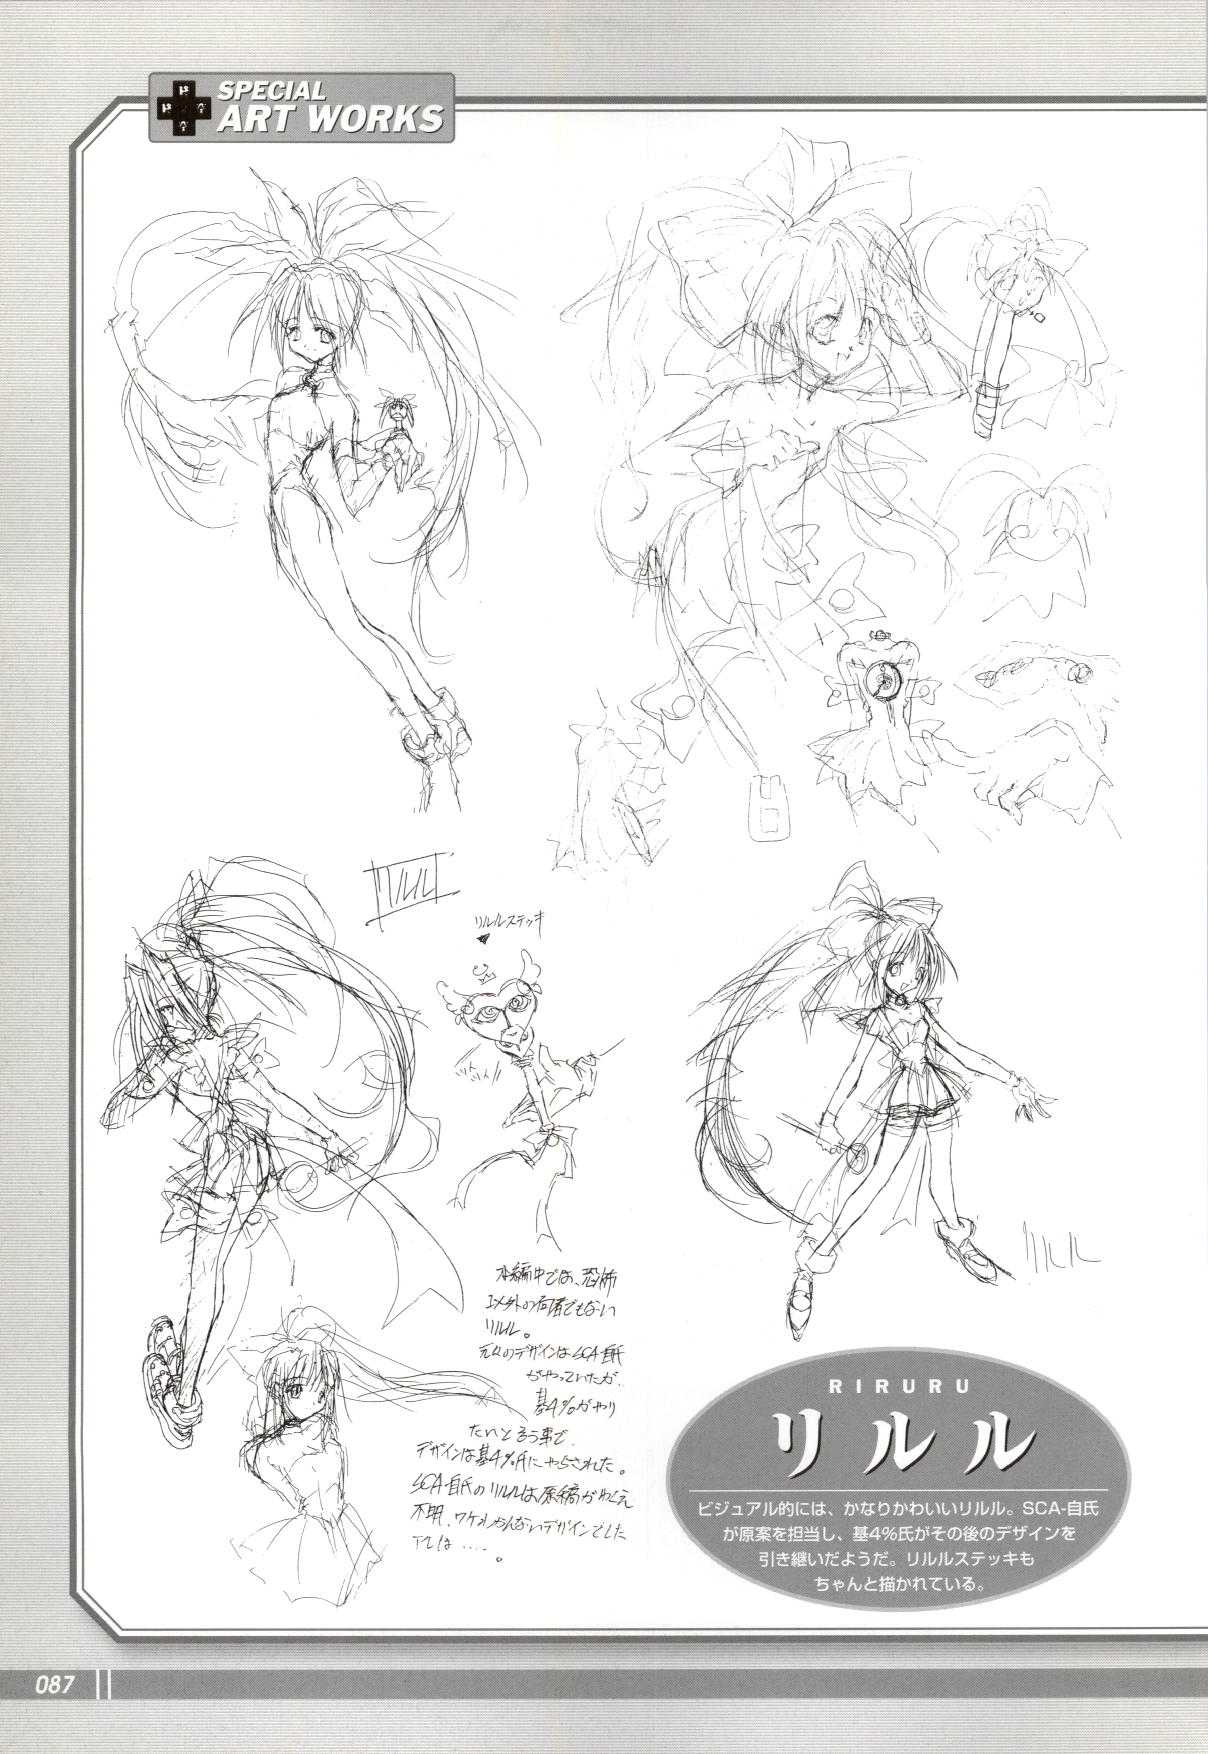 Tsui no Sora artbook 